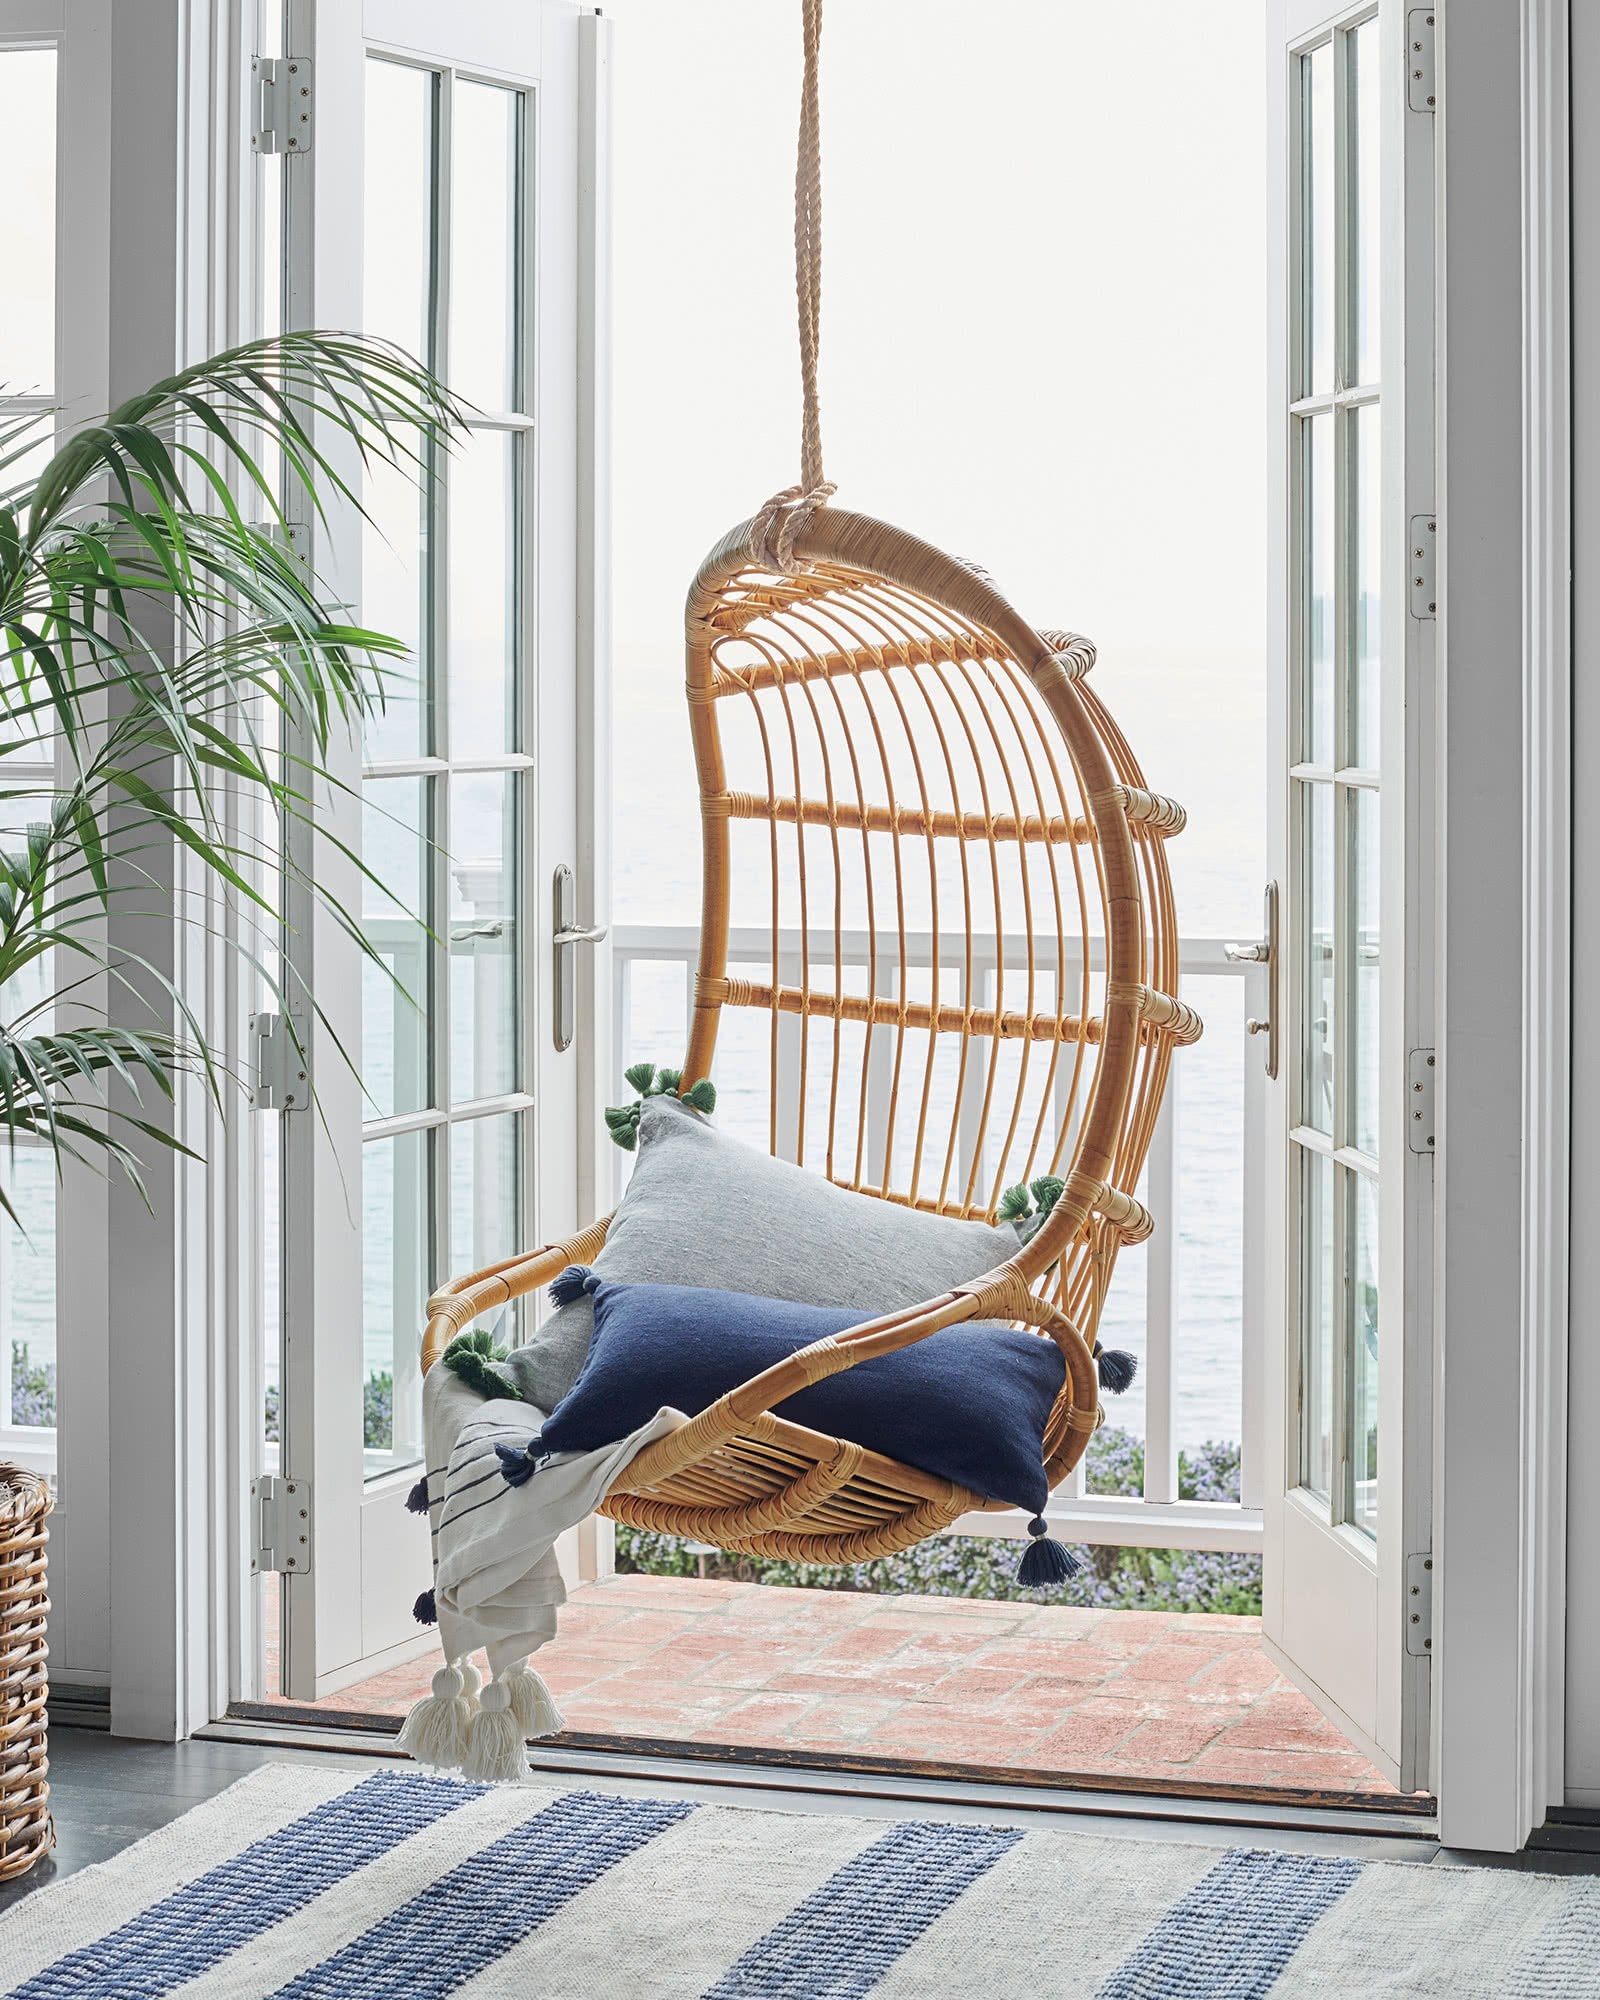 Hanging Rattan Chair - Image 2